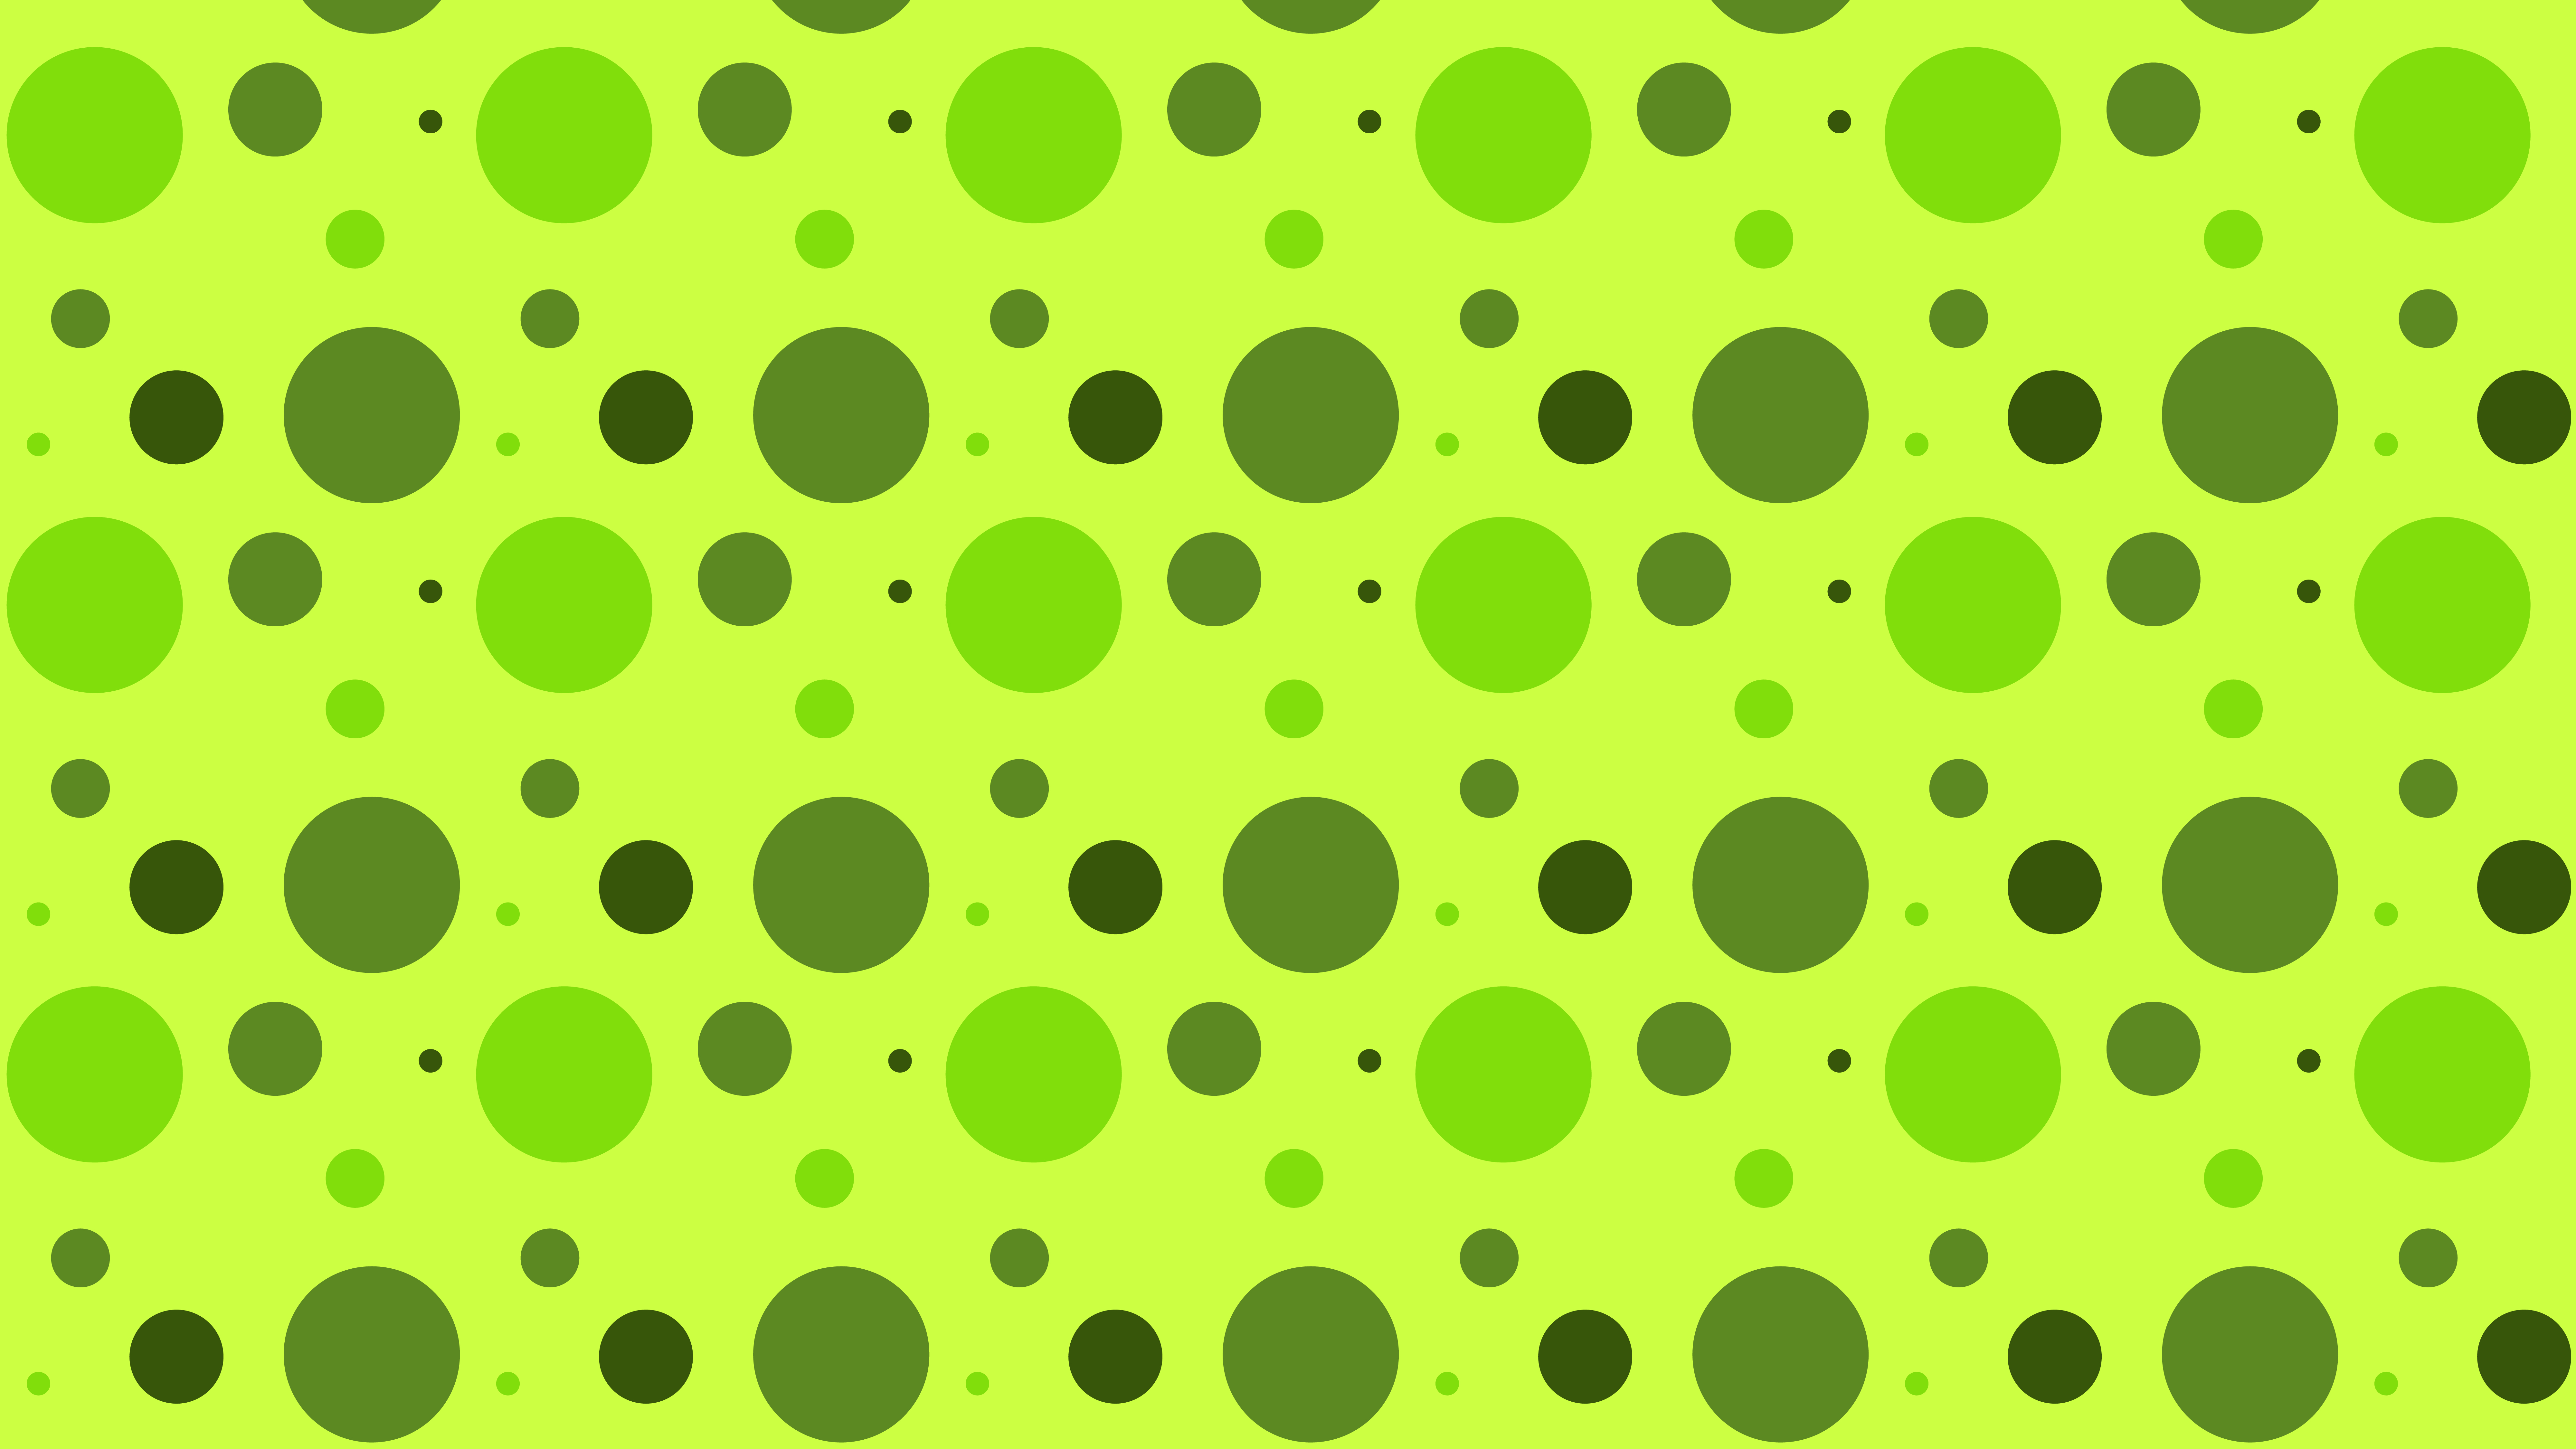 Green on Green Polka Dot Background - Green on Green Polka Dot